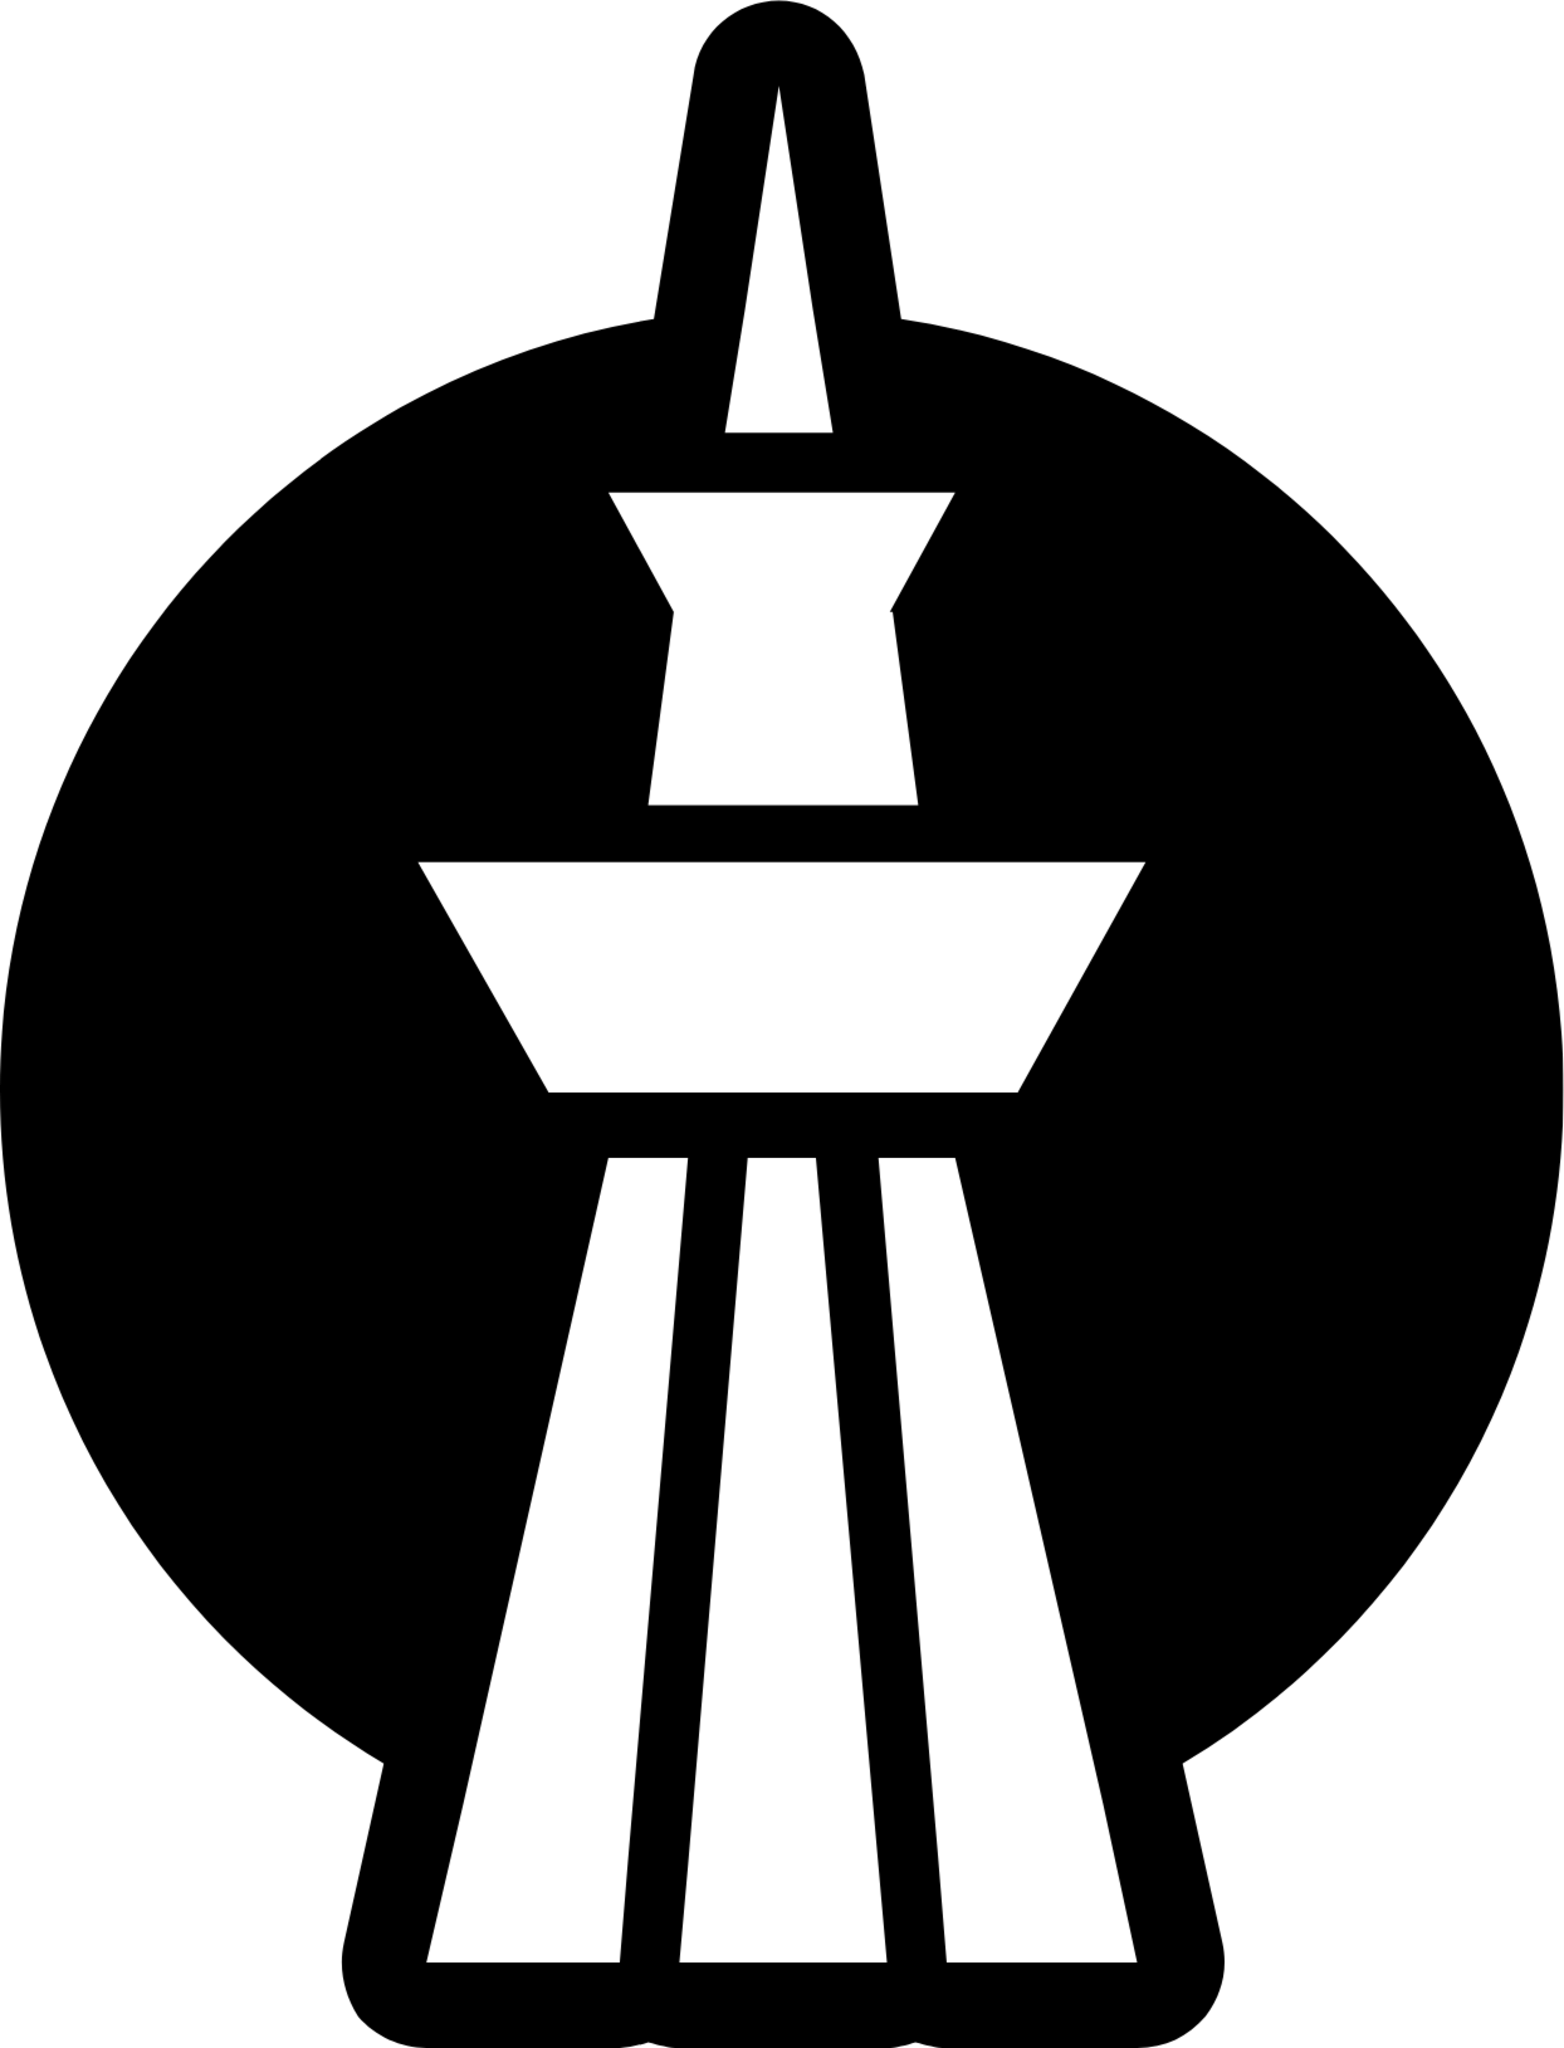 yapcasialogomark icon